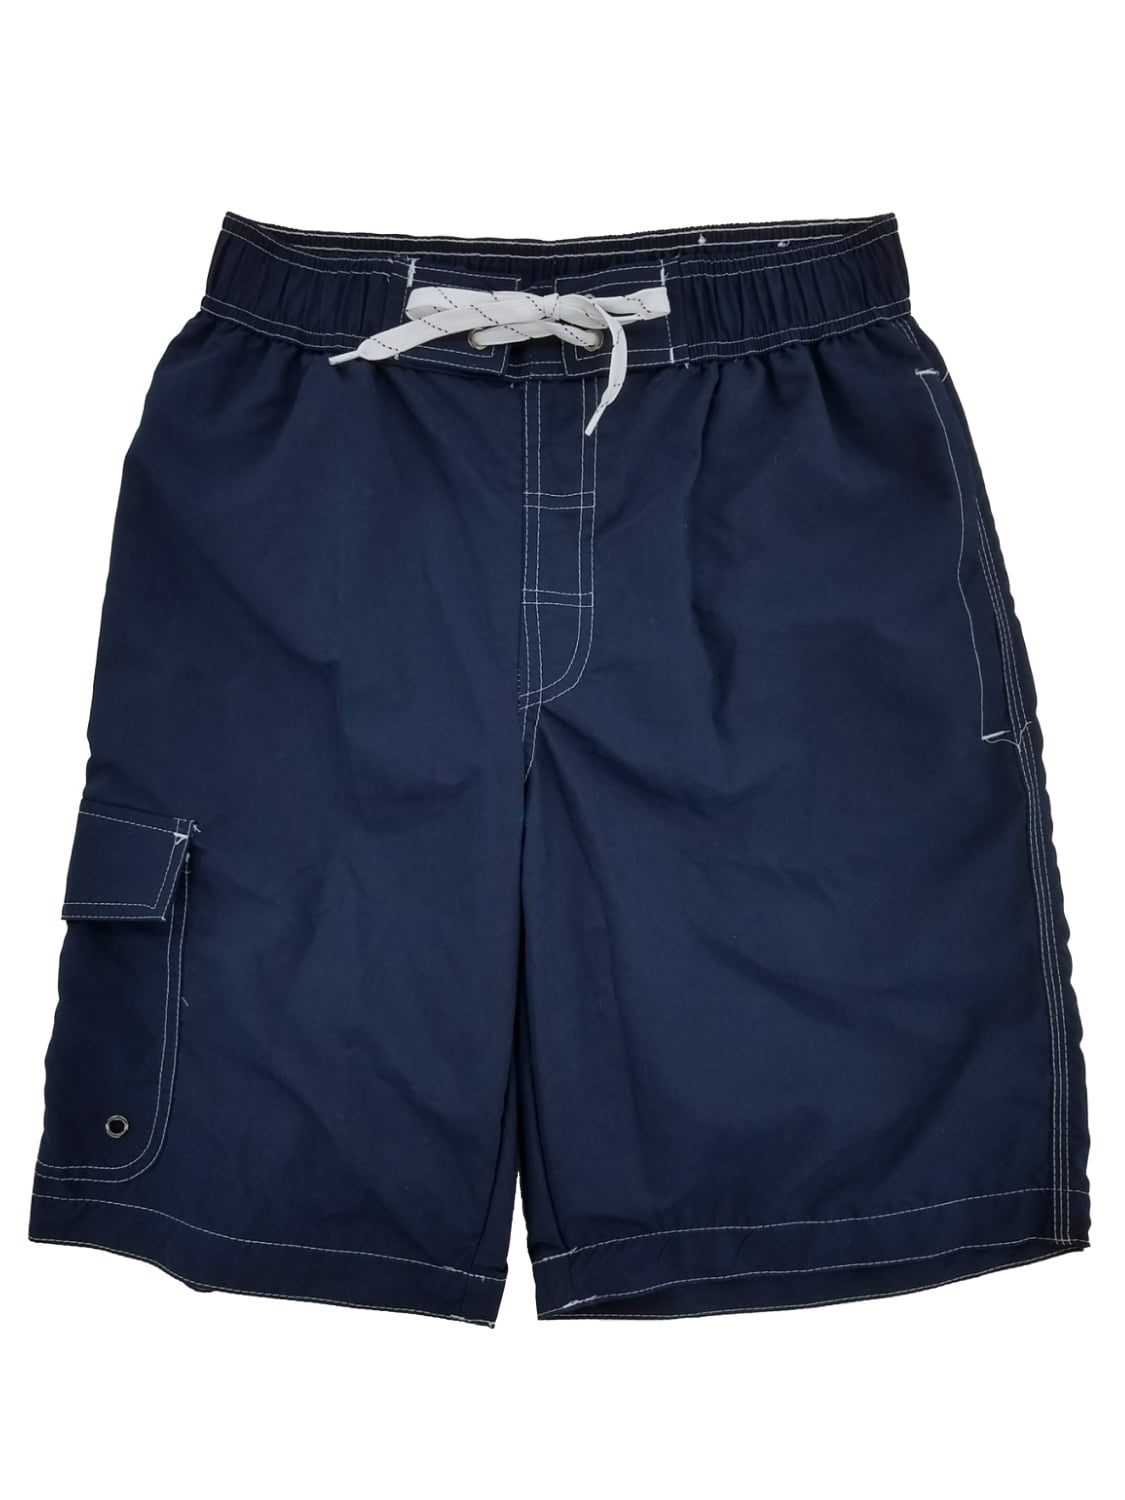 Mens Blue Lighting Popular Quick Dry Swim Trunks Elastic Drawstring Cargo Shorts with Pocket